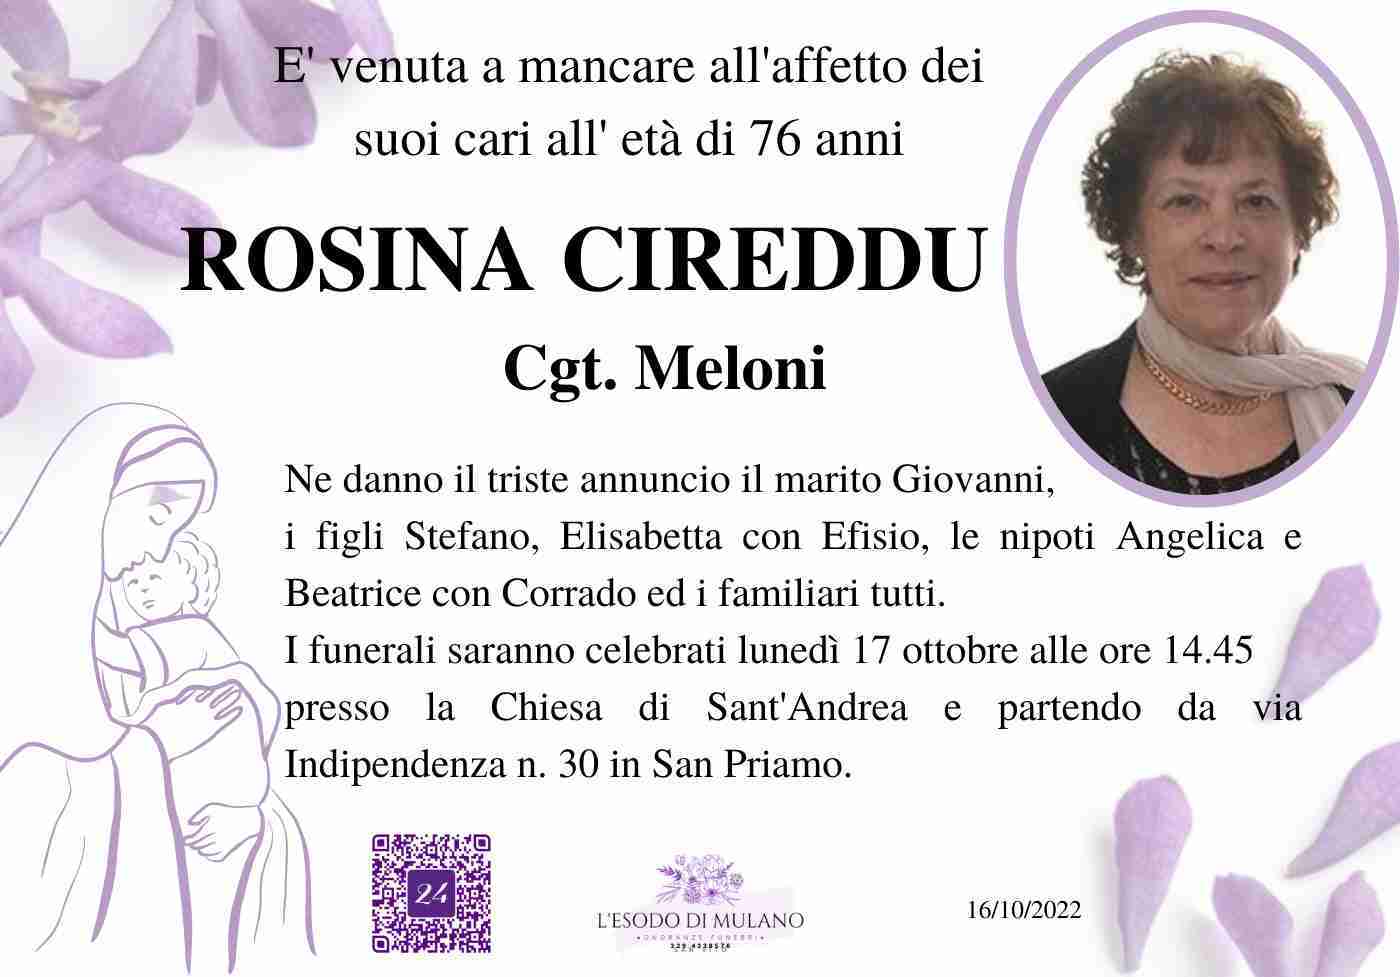 Rosina Cireddu